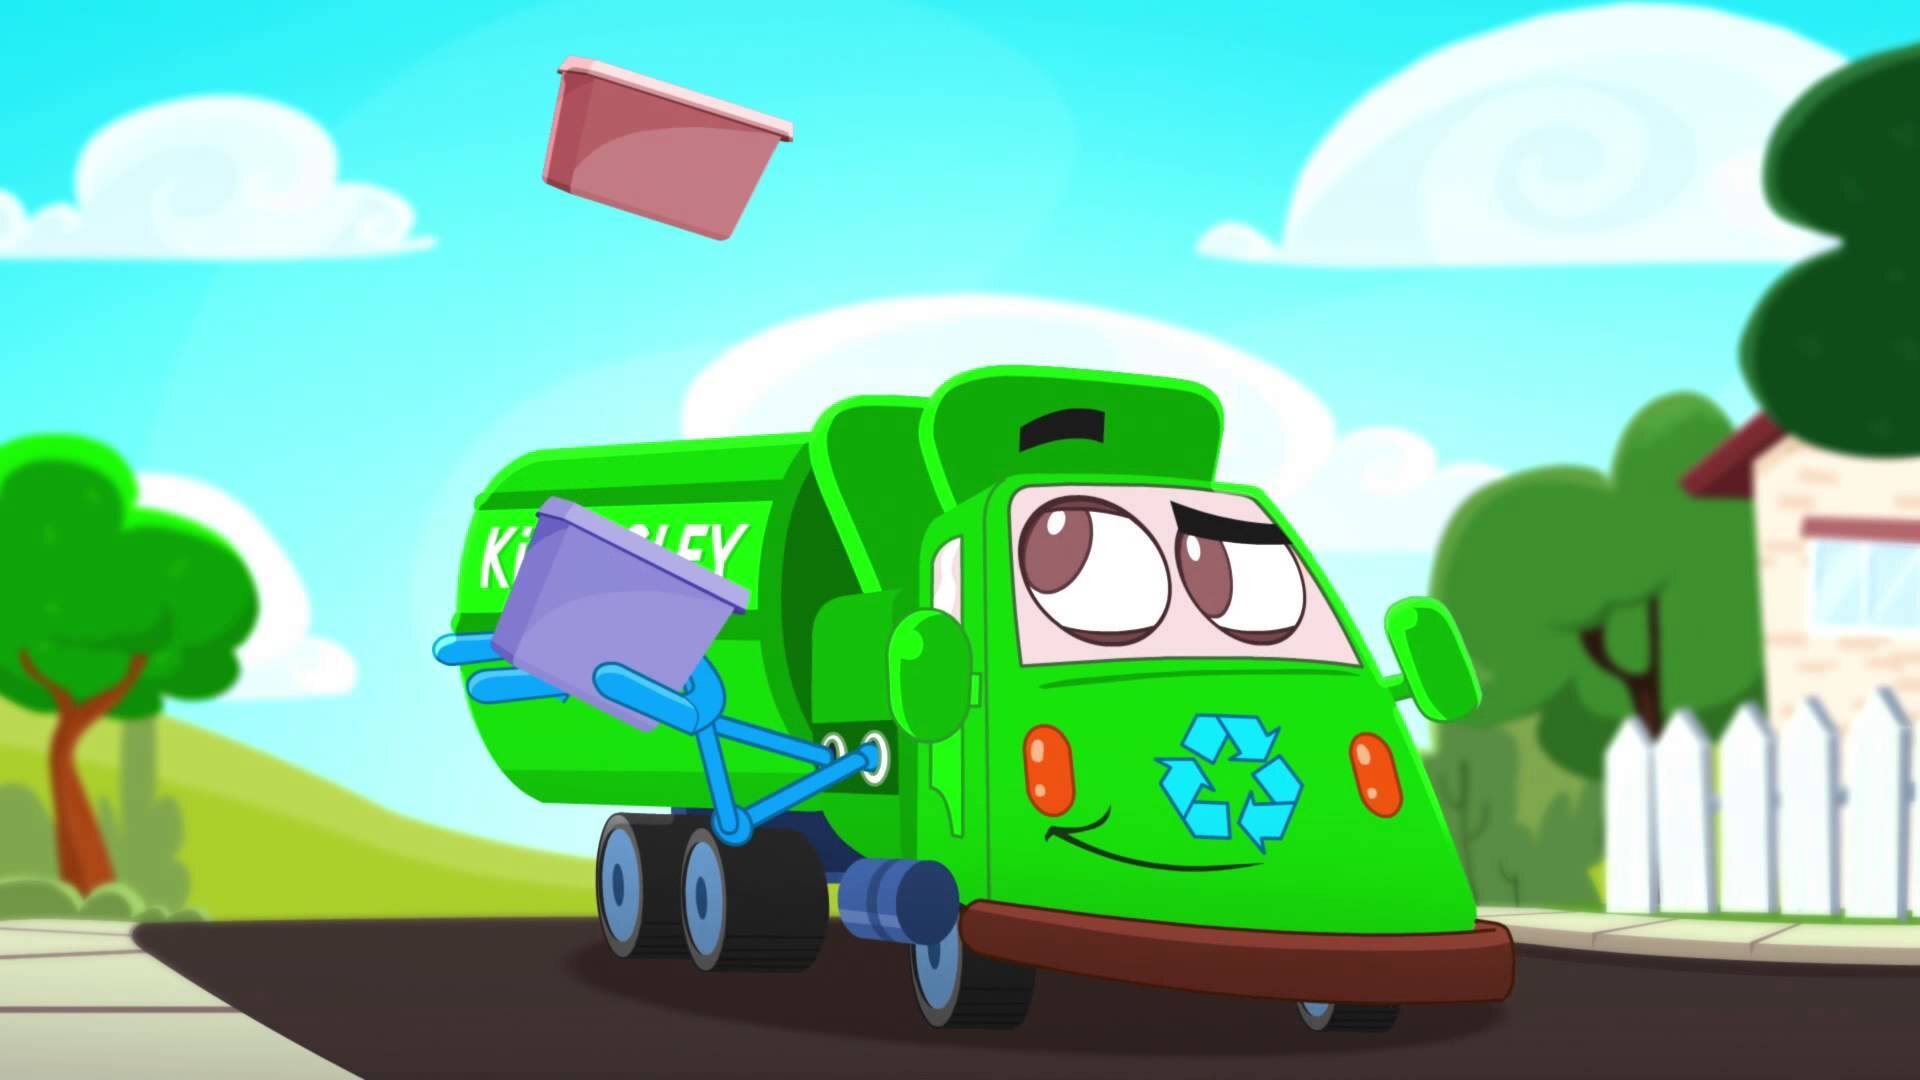 Preschool TV series with a Green Message
https://t.co/zdGkSeZndS